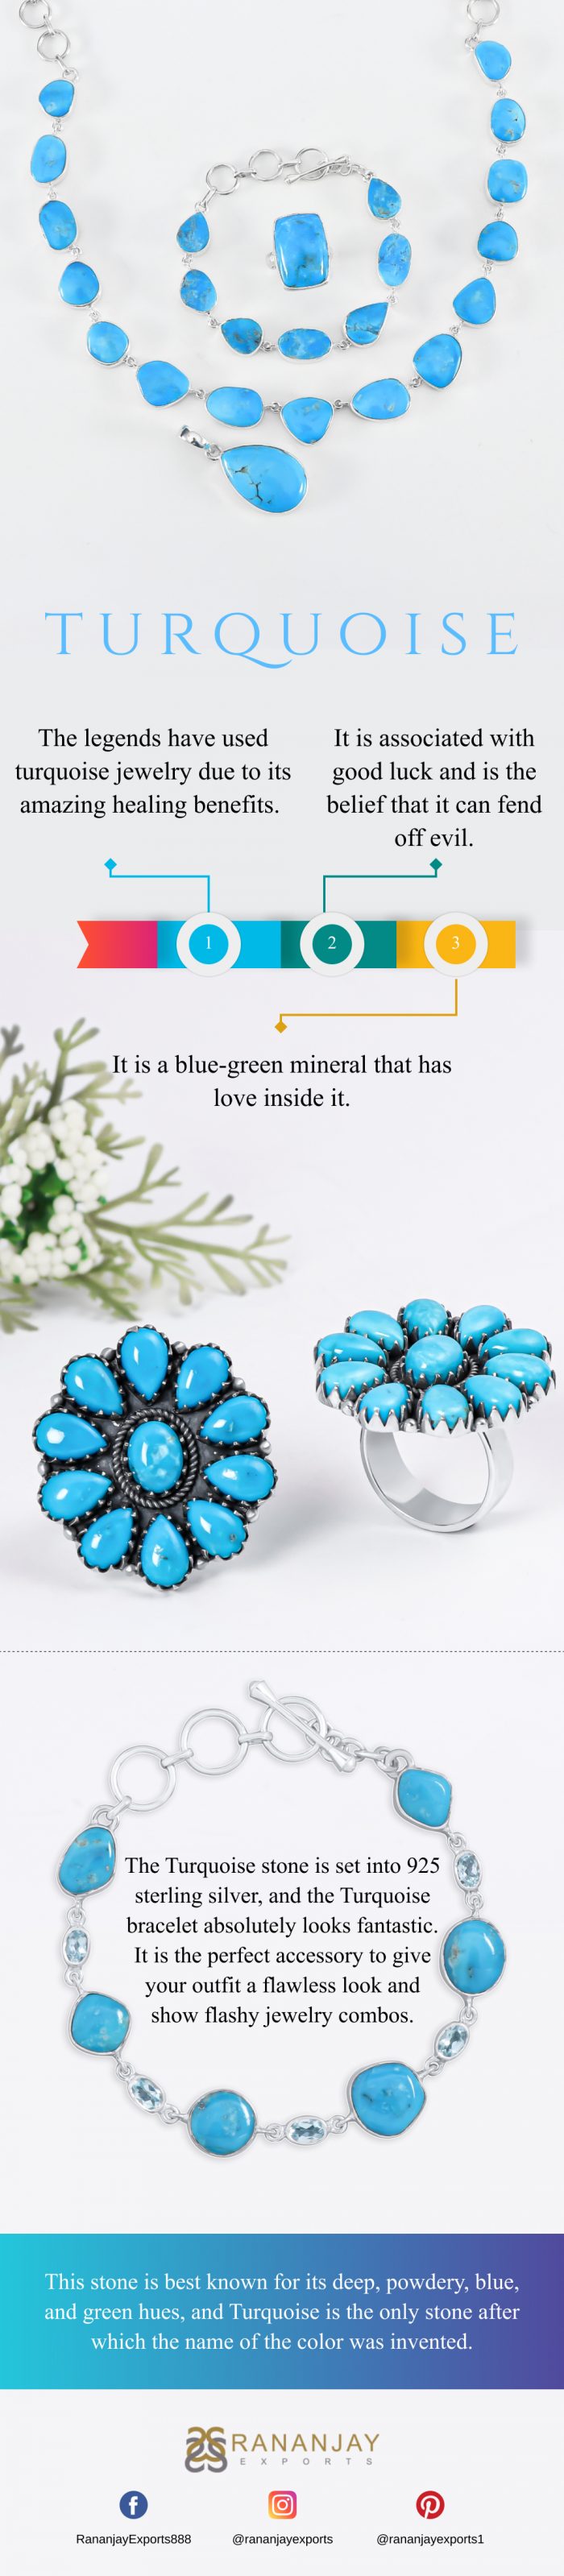 Turquoise Jewelry And Amazing Healing Benefits